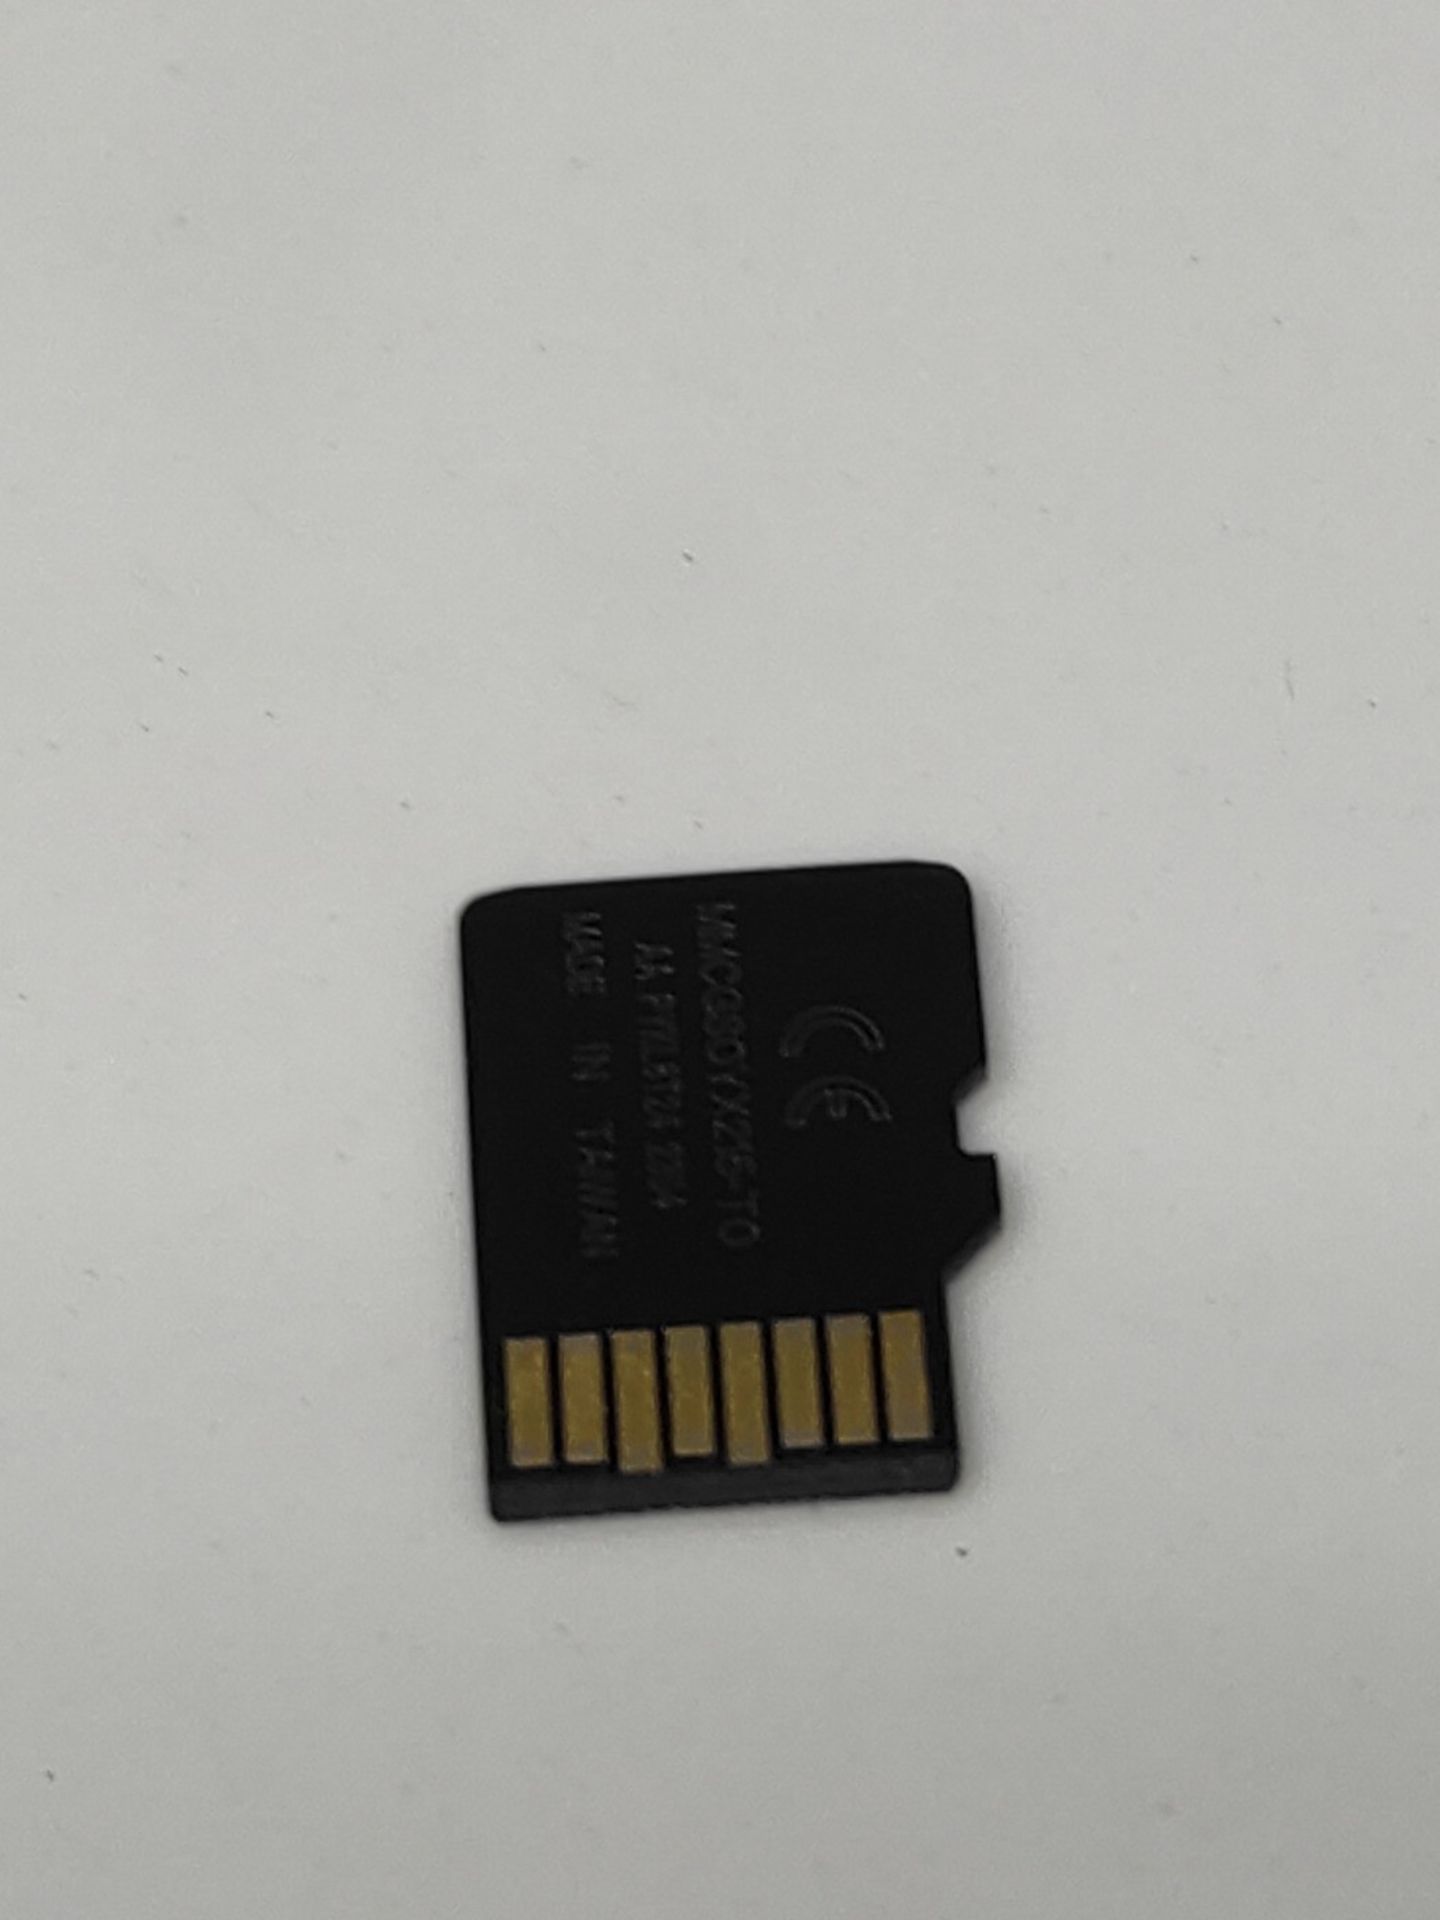 Mini-SD card, 512 GB, Micro-SD card, TF card, high speed, 512 GB, Class 10, memory car - Image 4 of 4